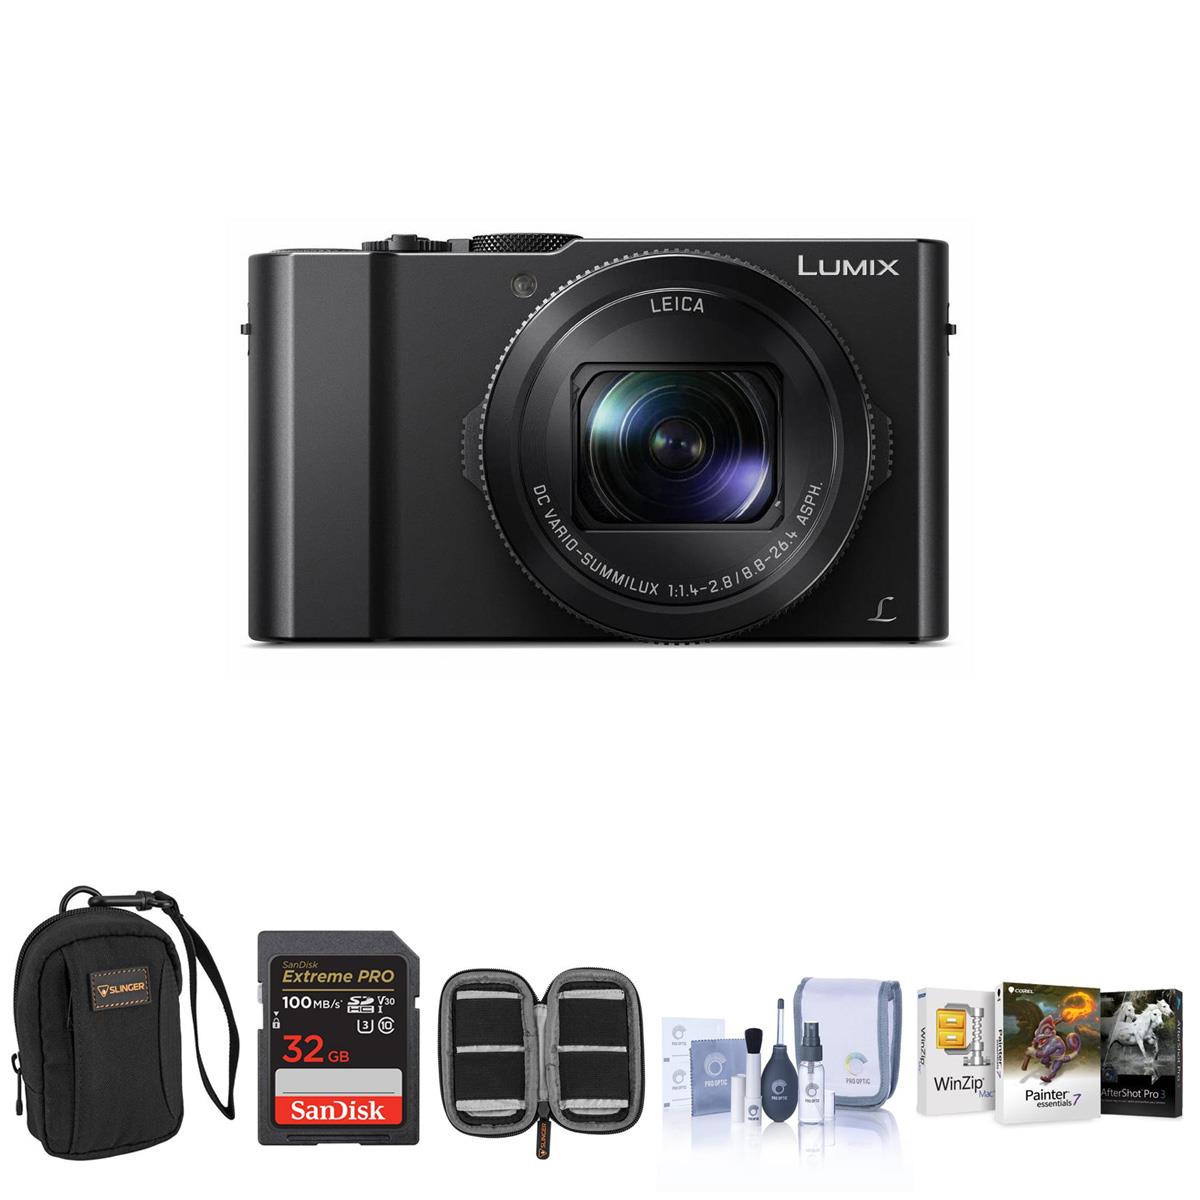 Panasonic Lumix DMC-LX10 Digital Camera with Free Accessories, Black